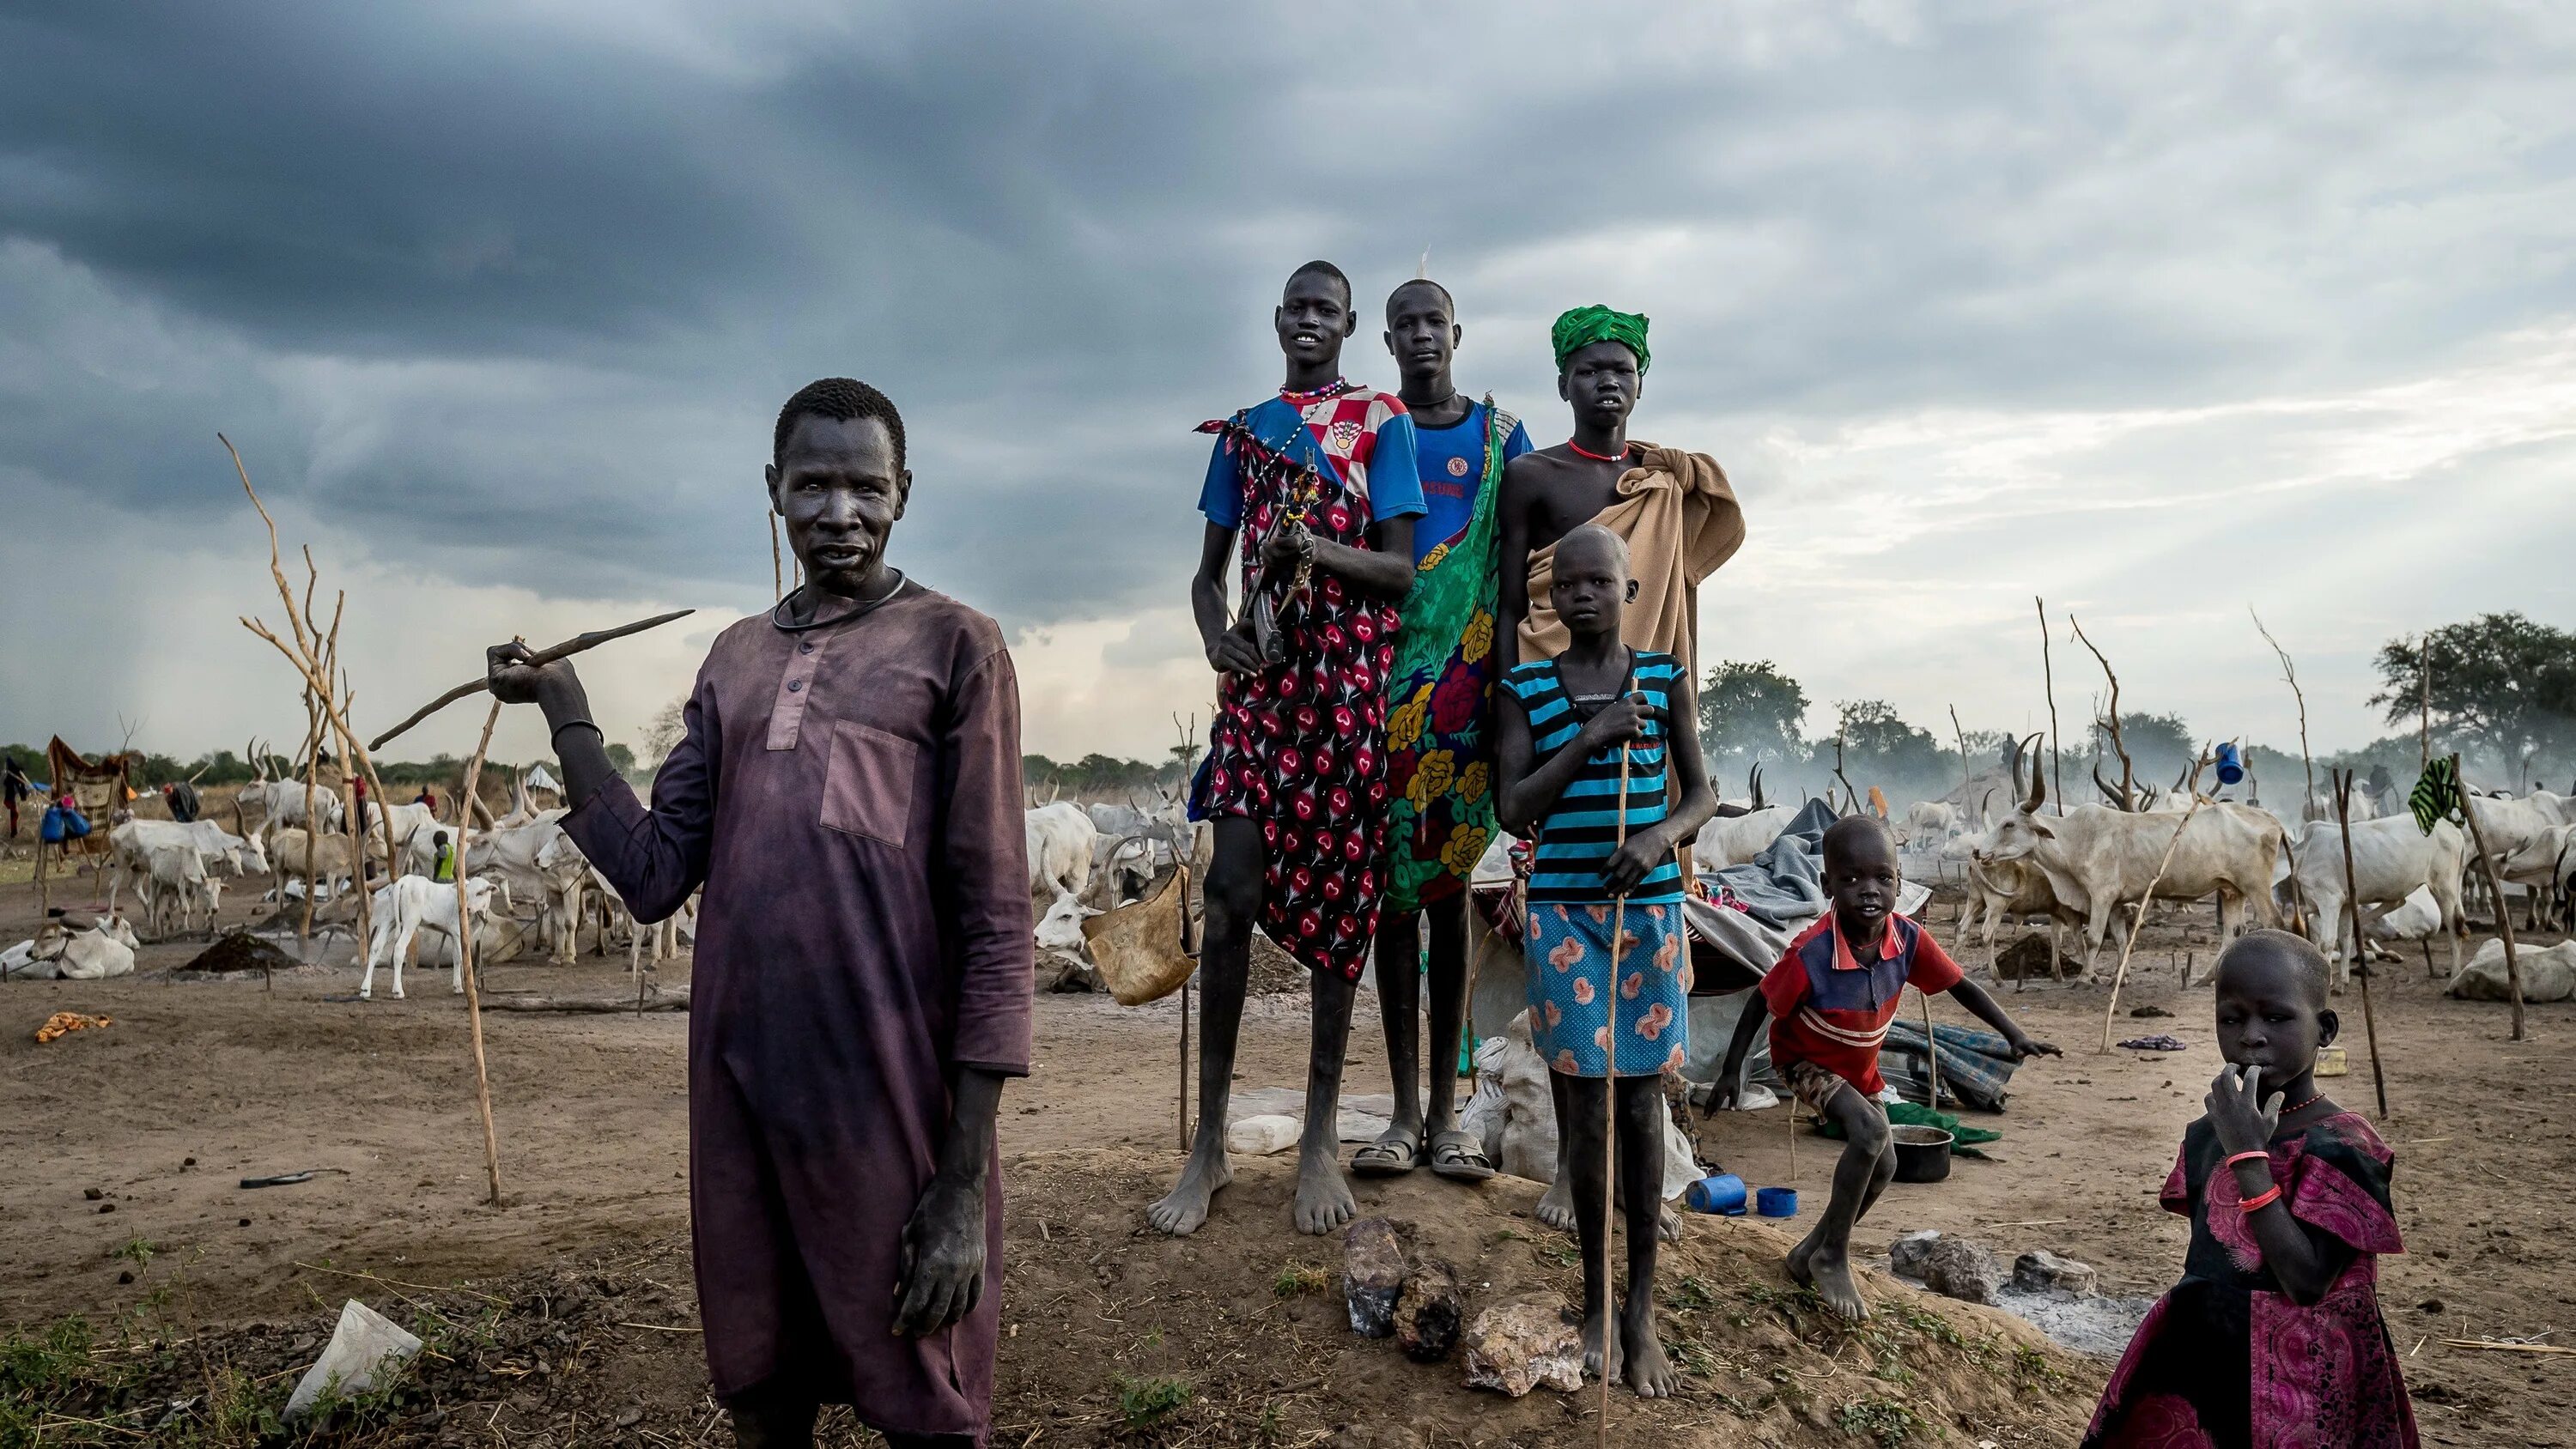 Южный Судан нац костюм населения. Суданцы народы Судана. Республика Южный Судан. Африка нищета Южного Судана.